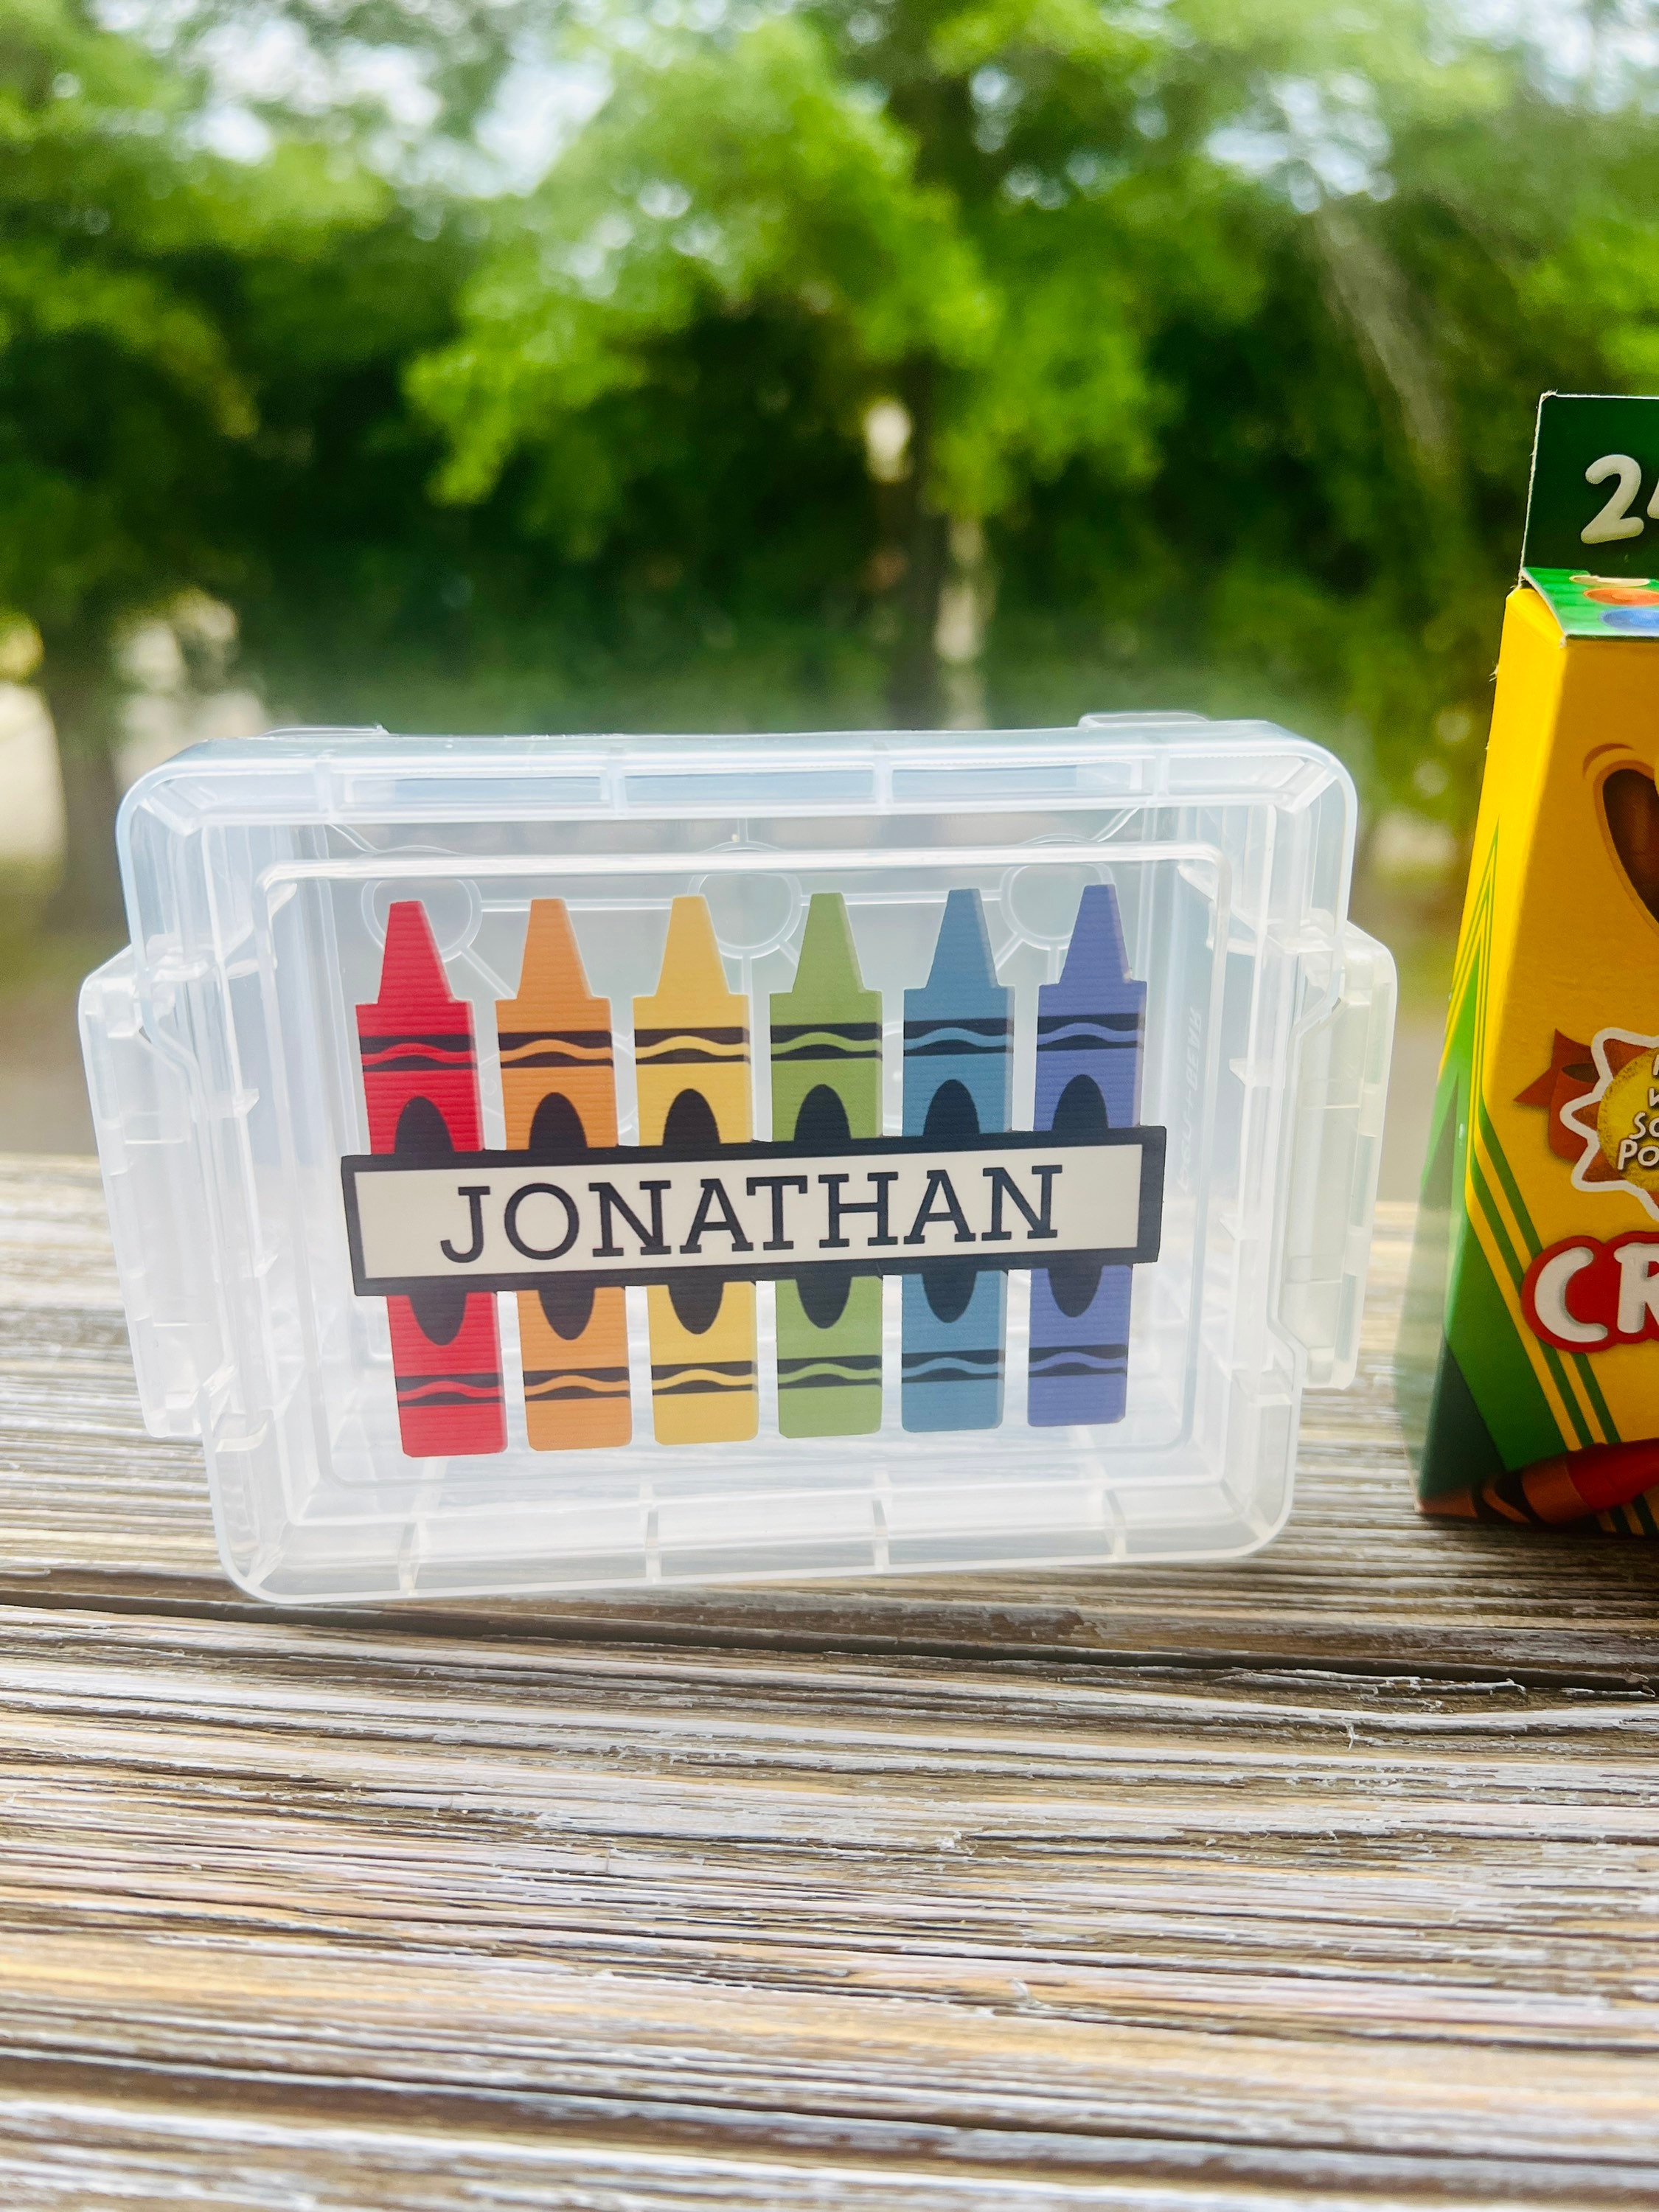 Personalized Crayon Box , School Supplies , Crayon Container, Back